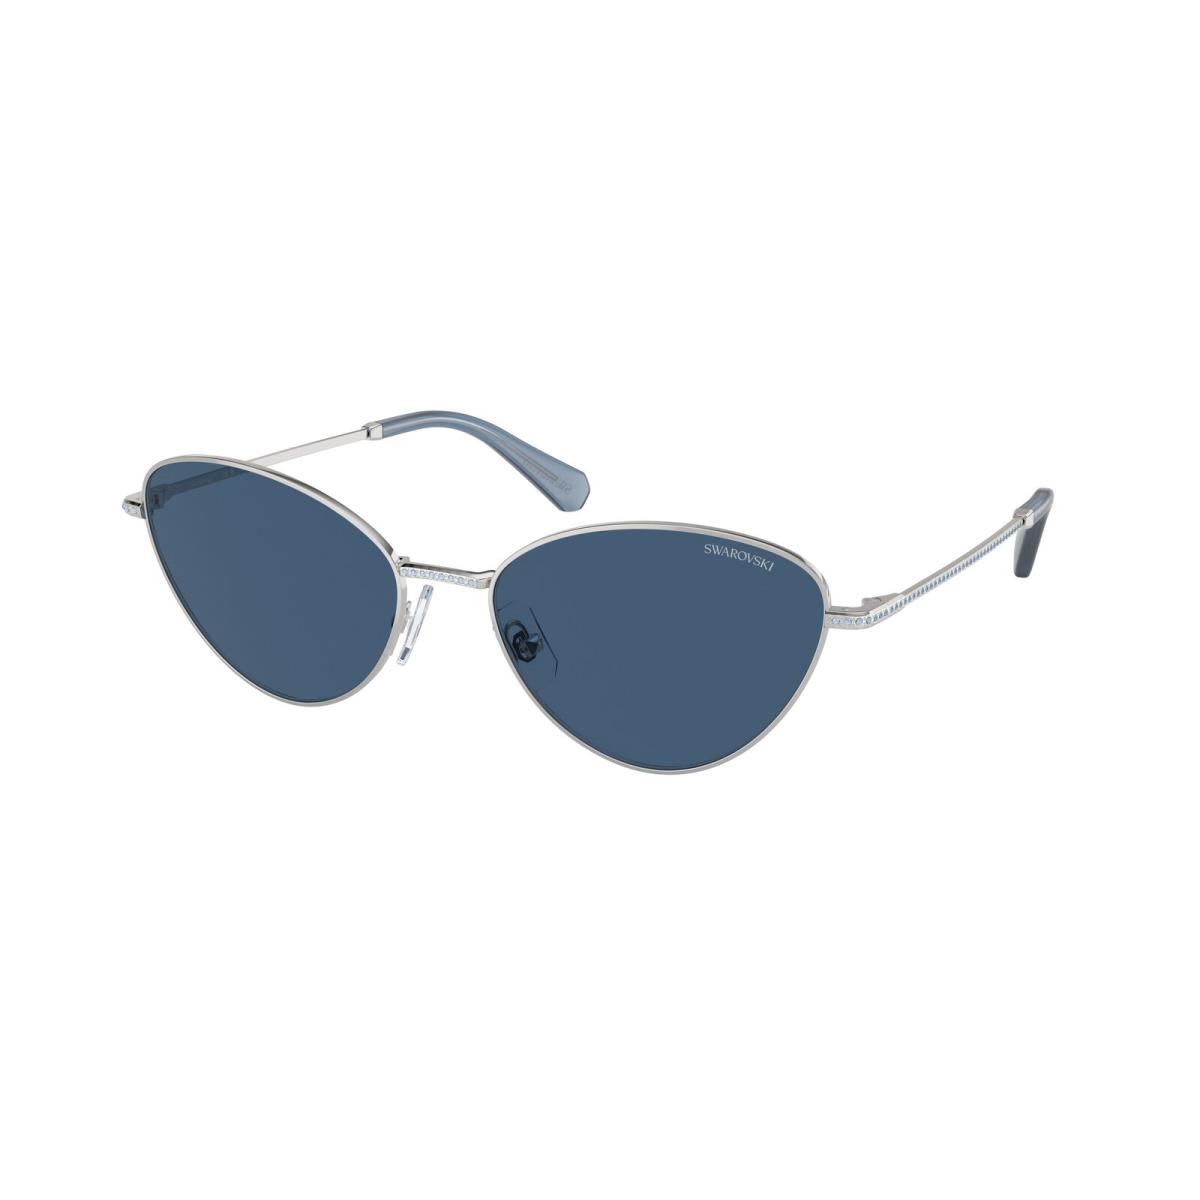 Swarovski SK 7014 Silver Dark Blue 400155 Sunglasses